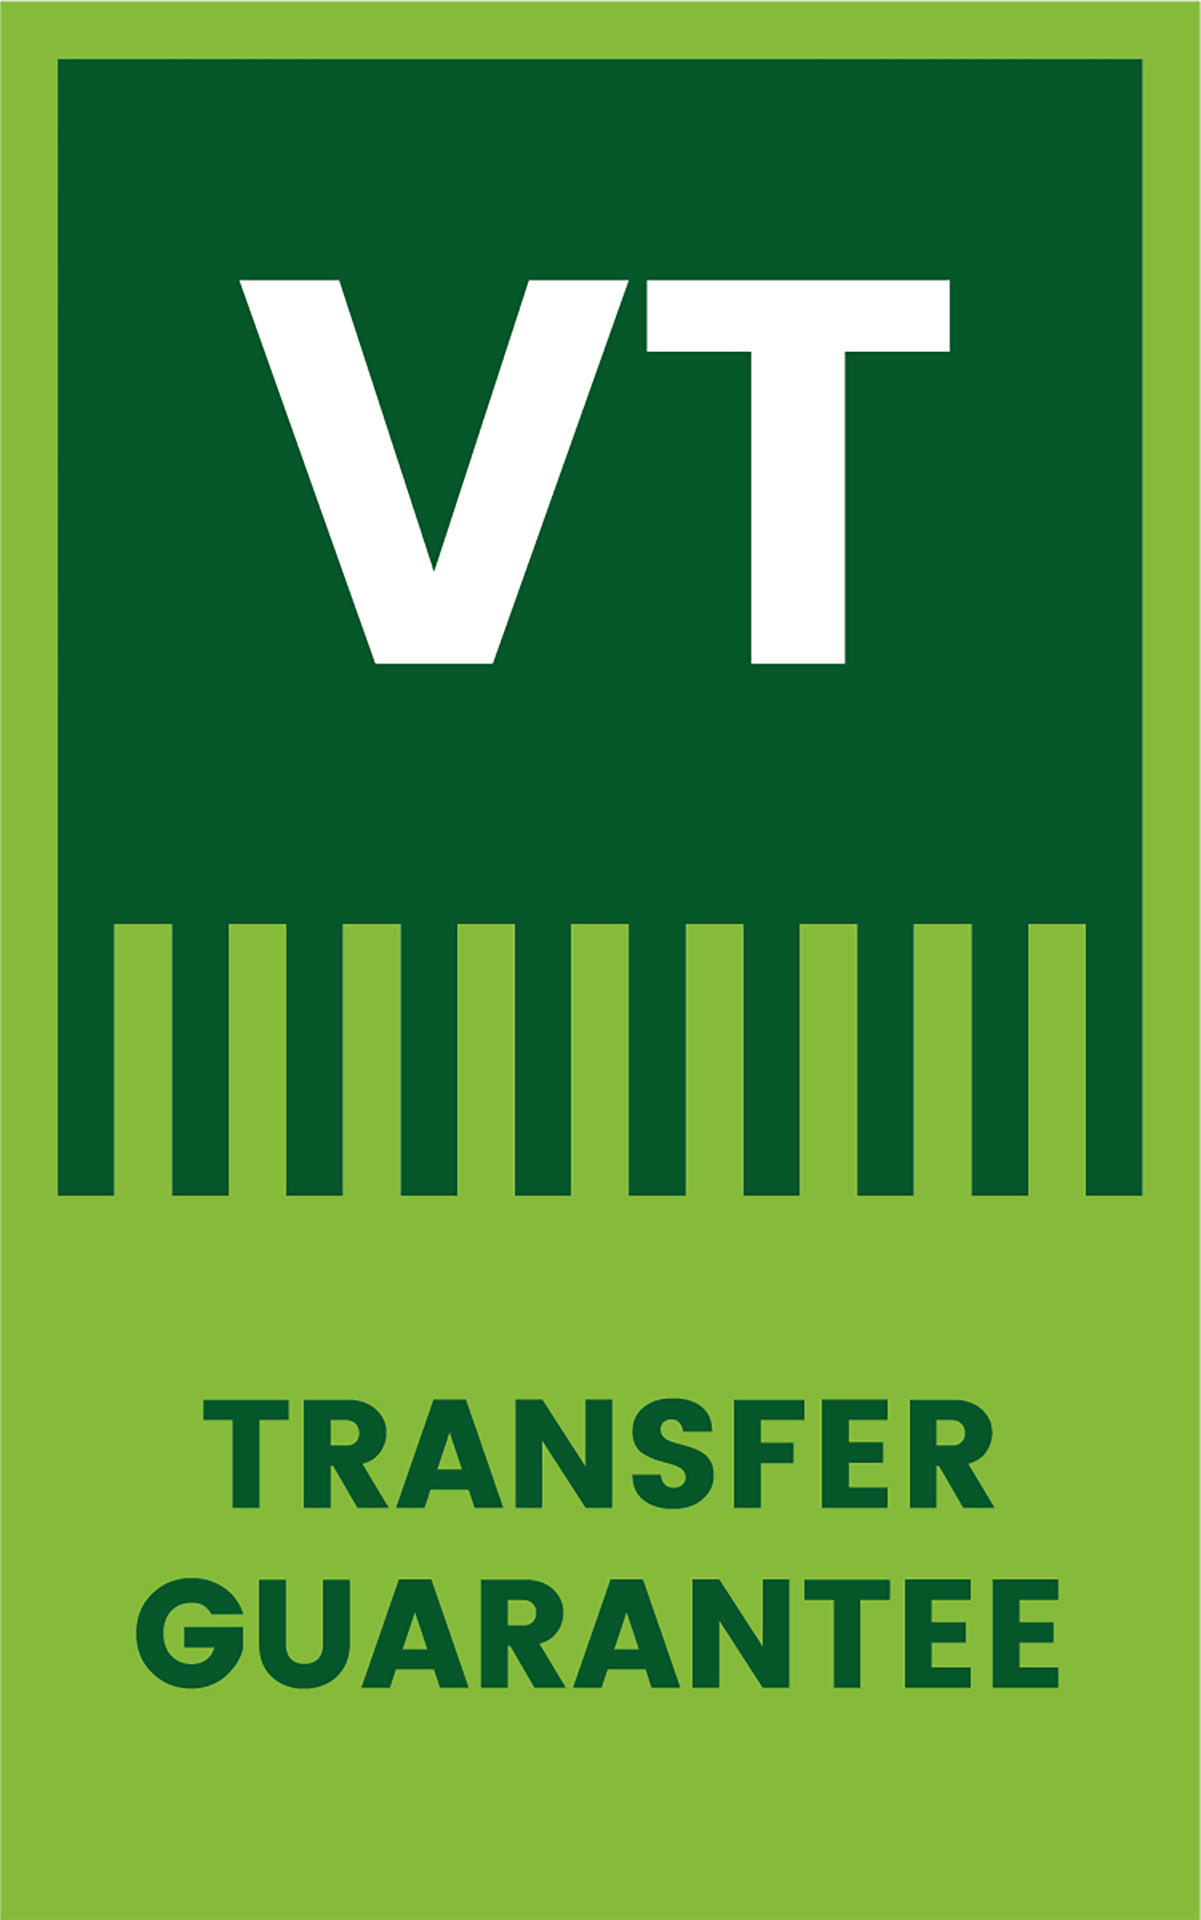 Vermont Transfer Guarantee logo